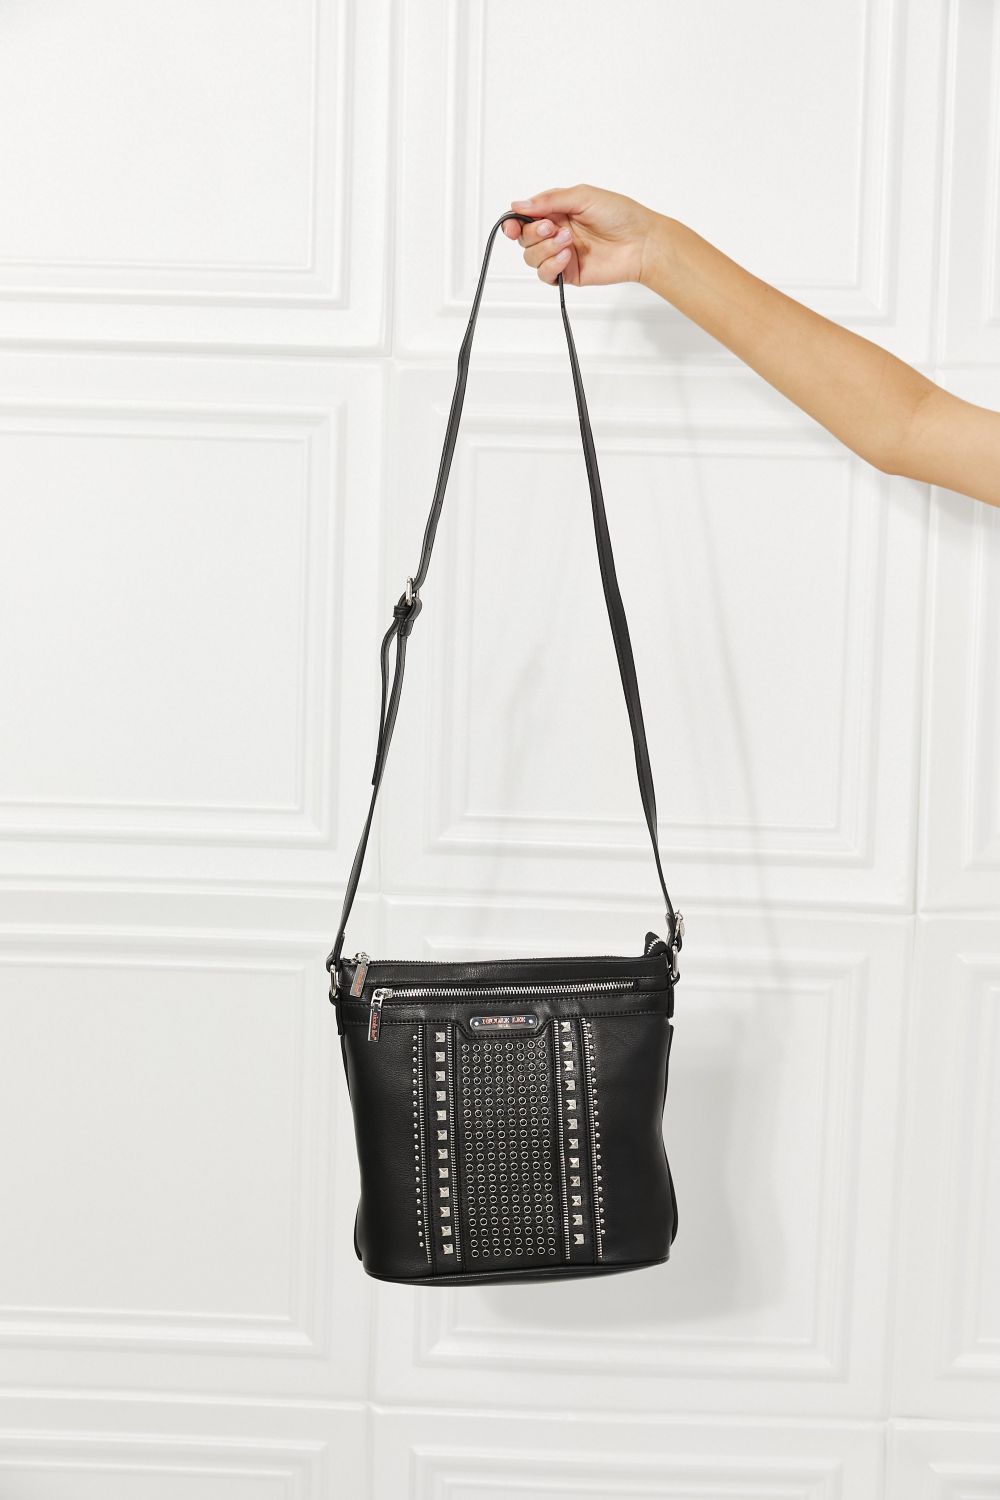 Nicole Lee USA Love Handbag - Handbag - FITGGINS